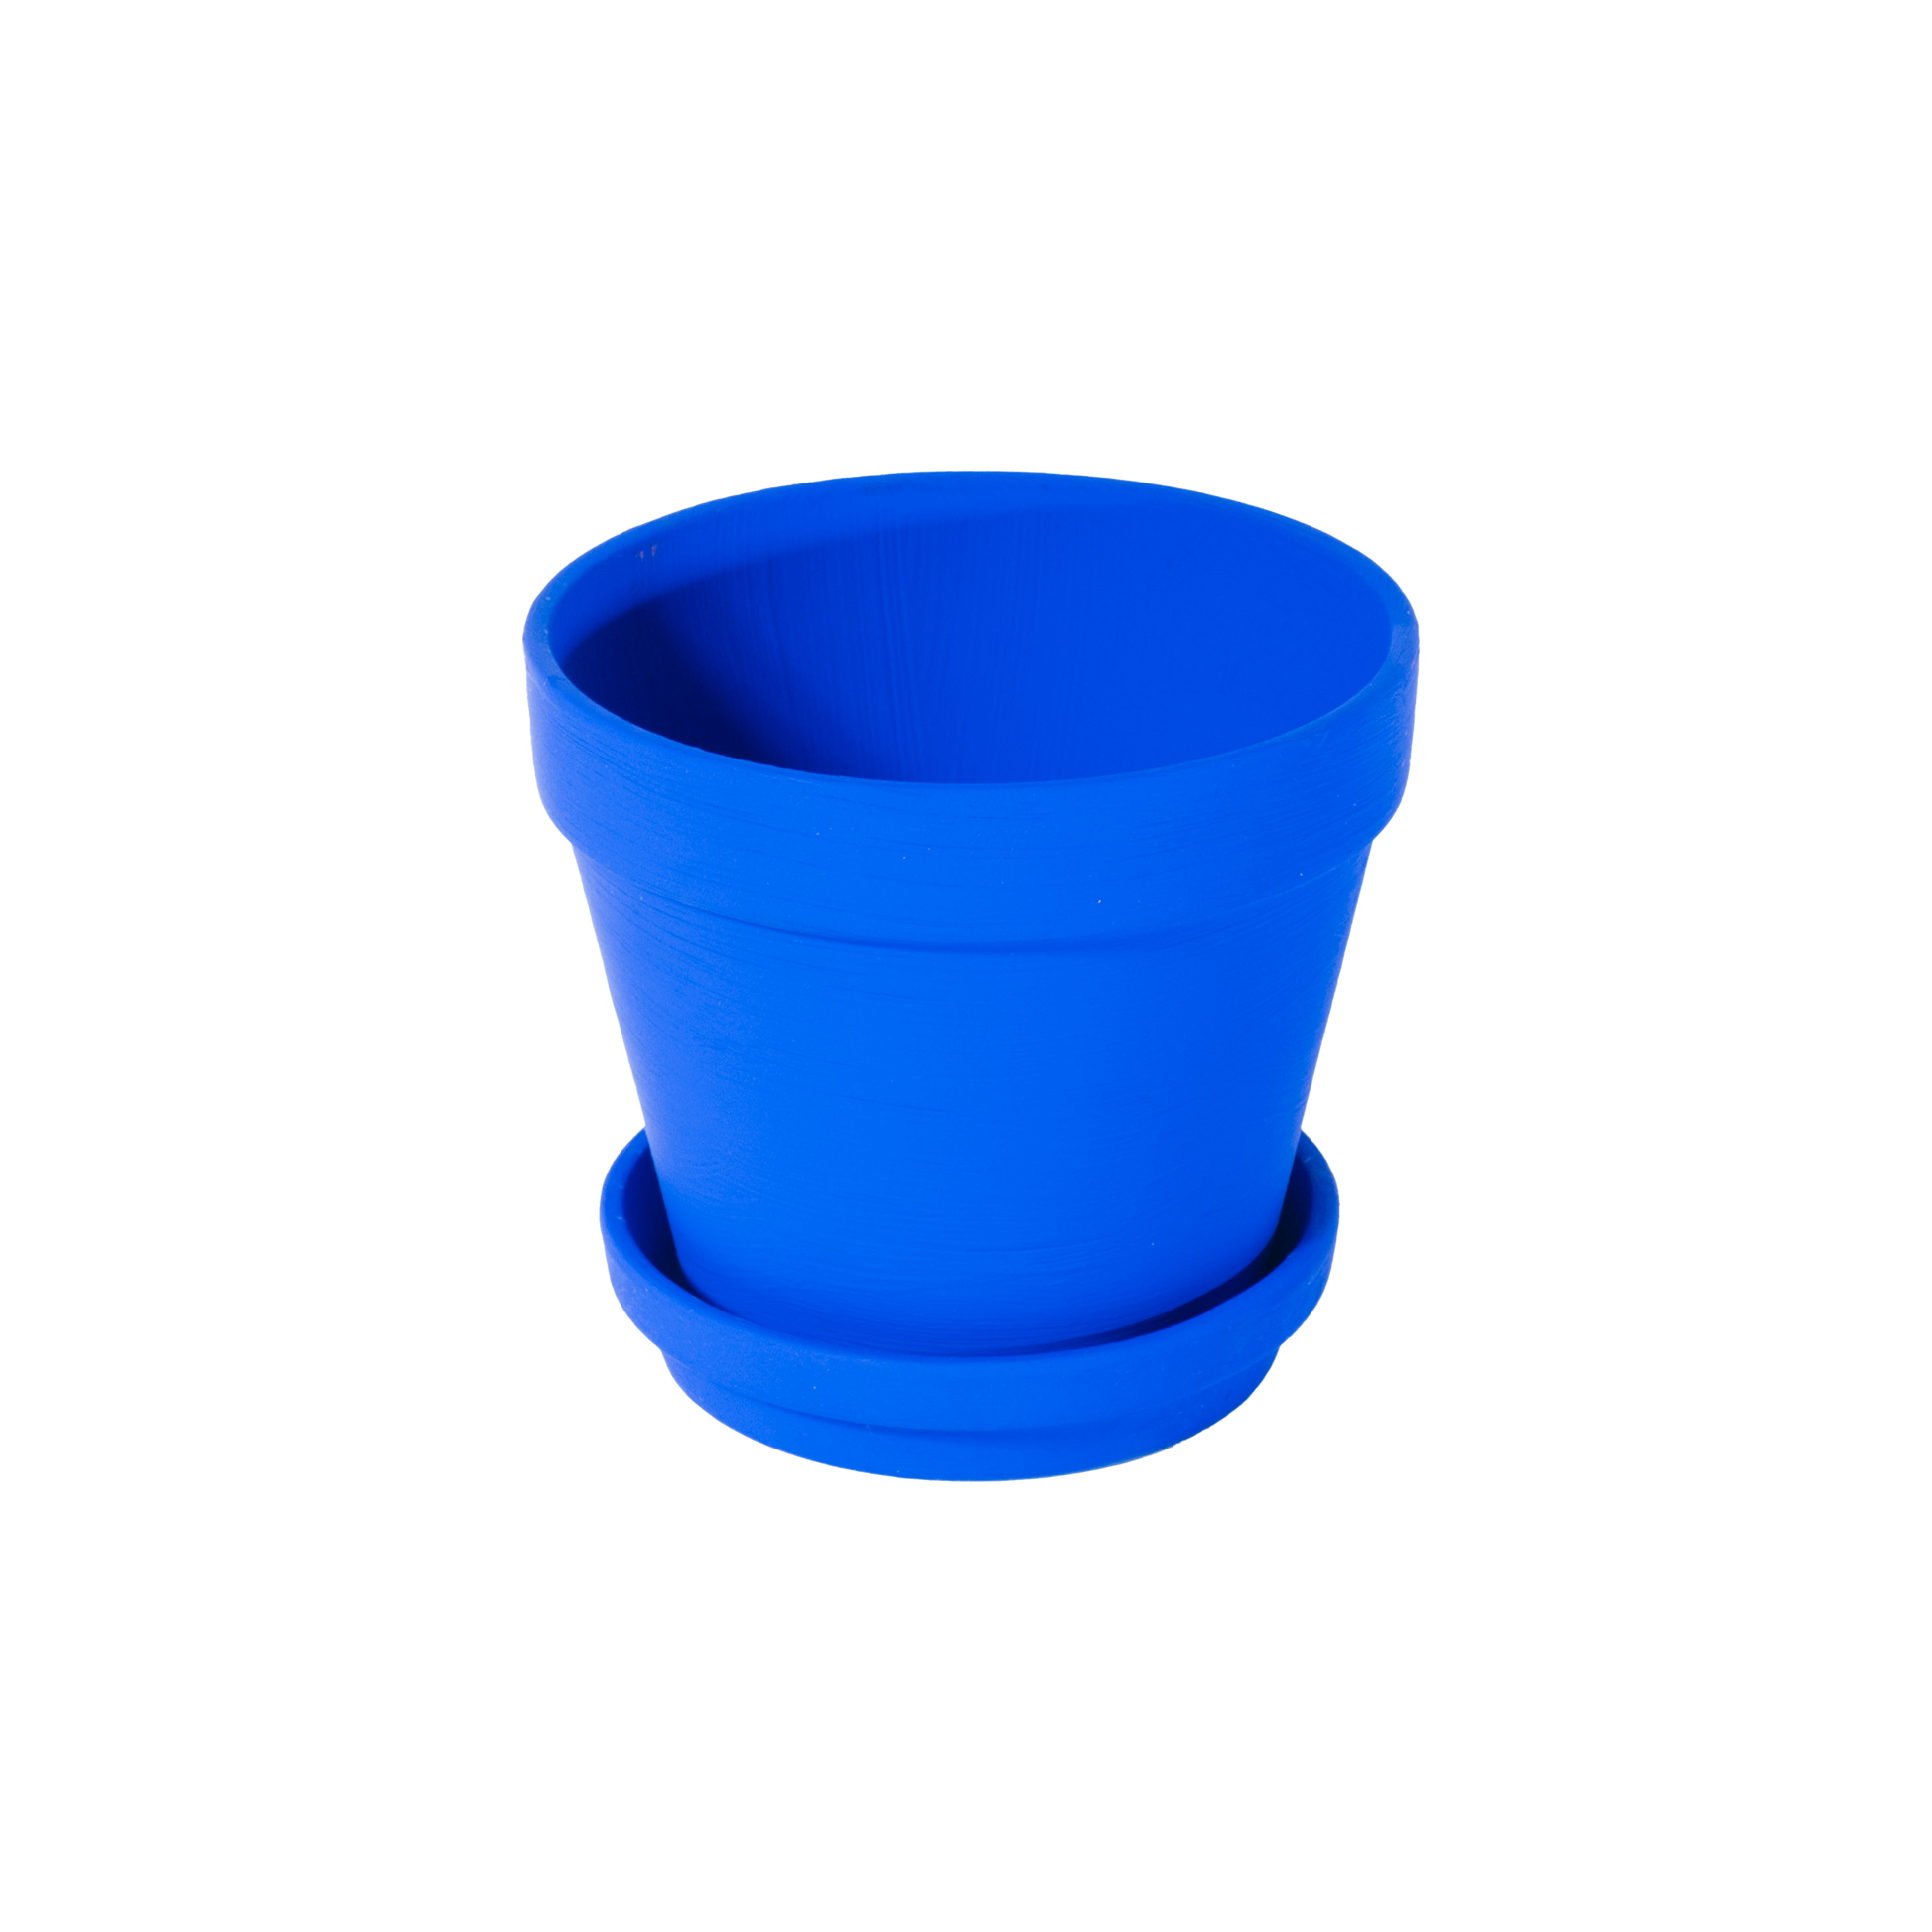 Yves Klein Blue Planter Pot Common Things